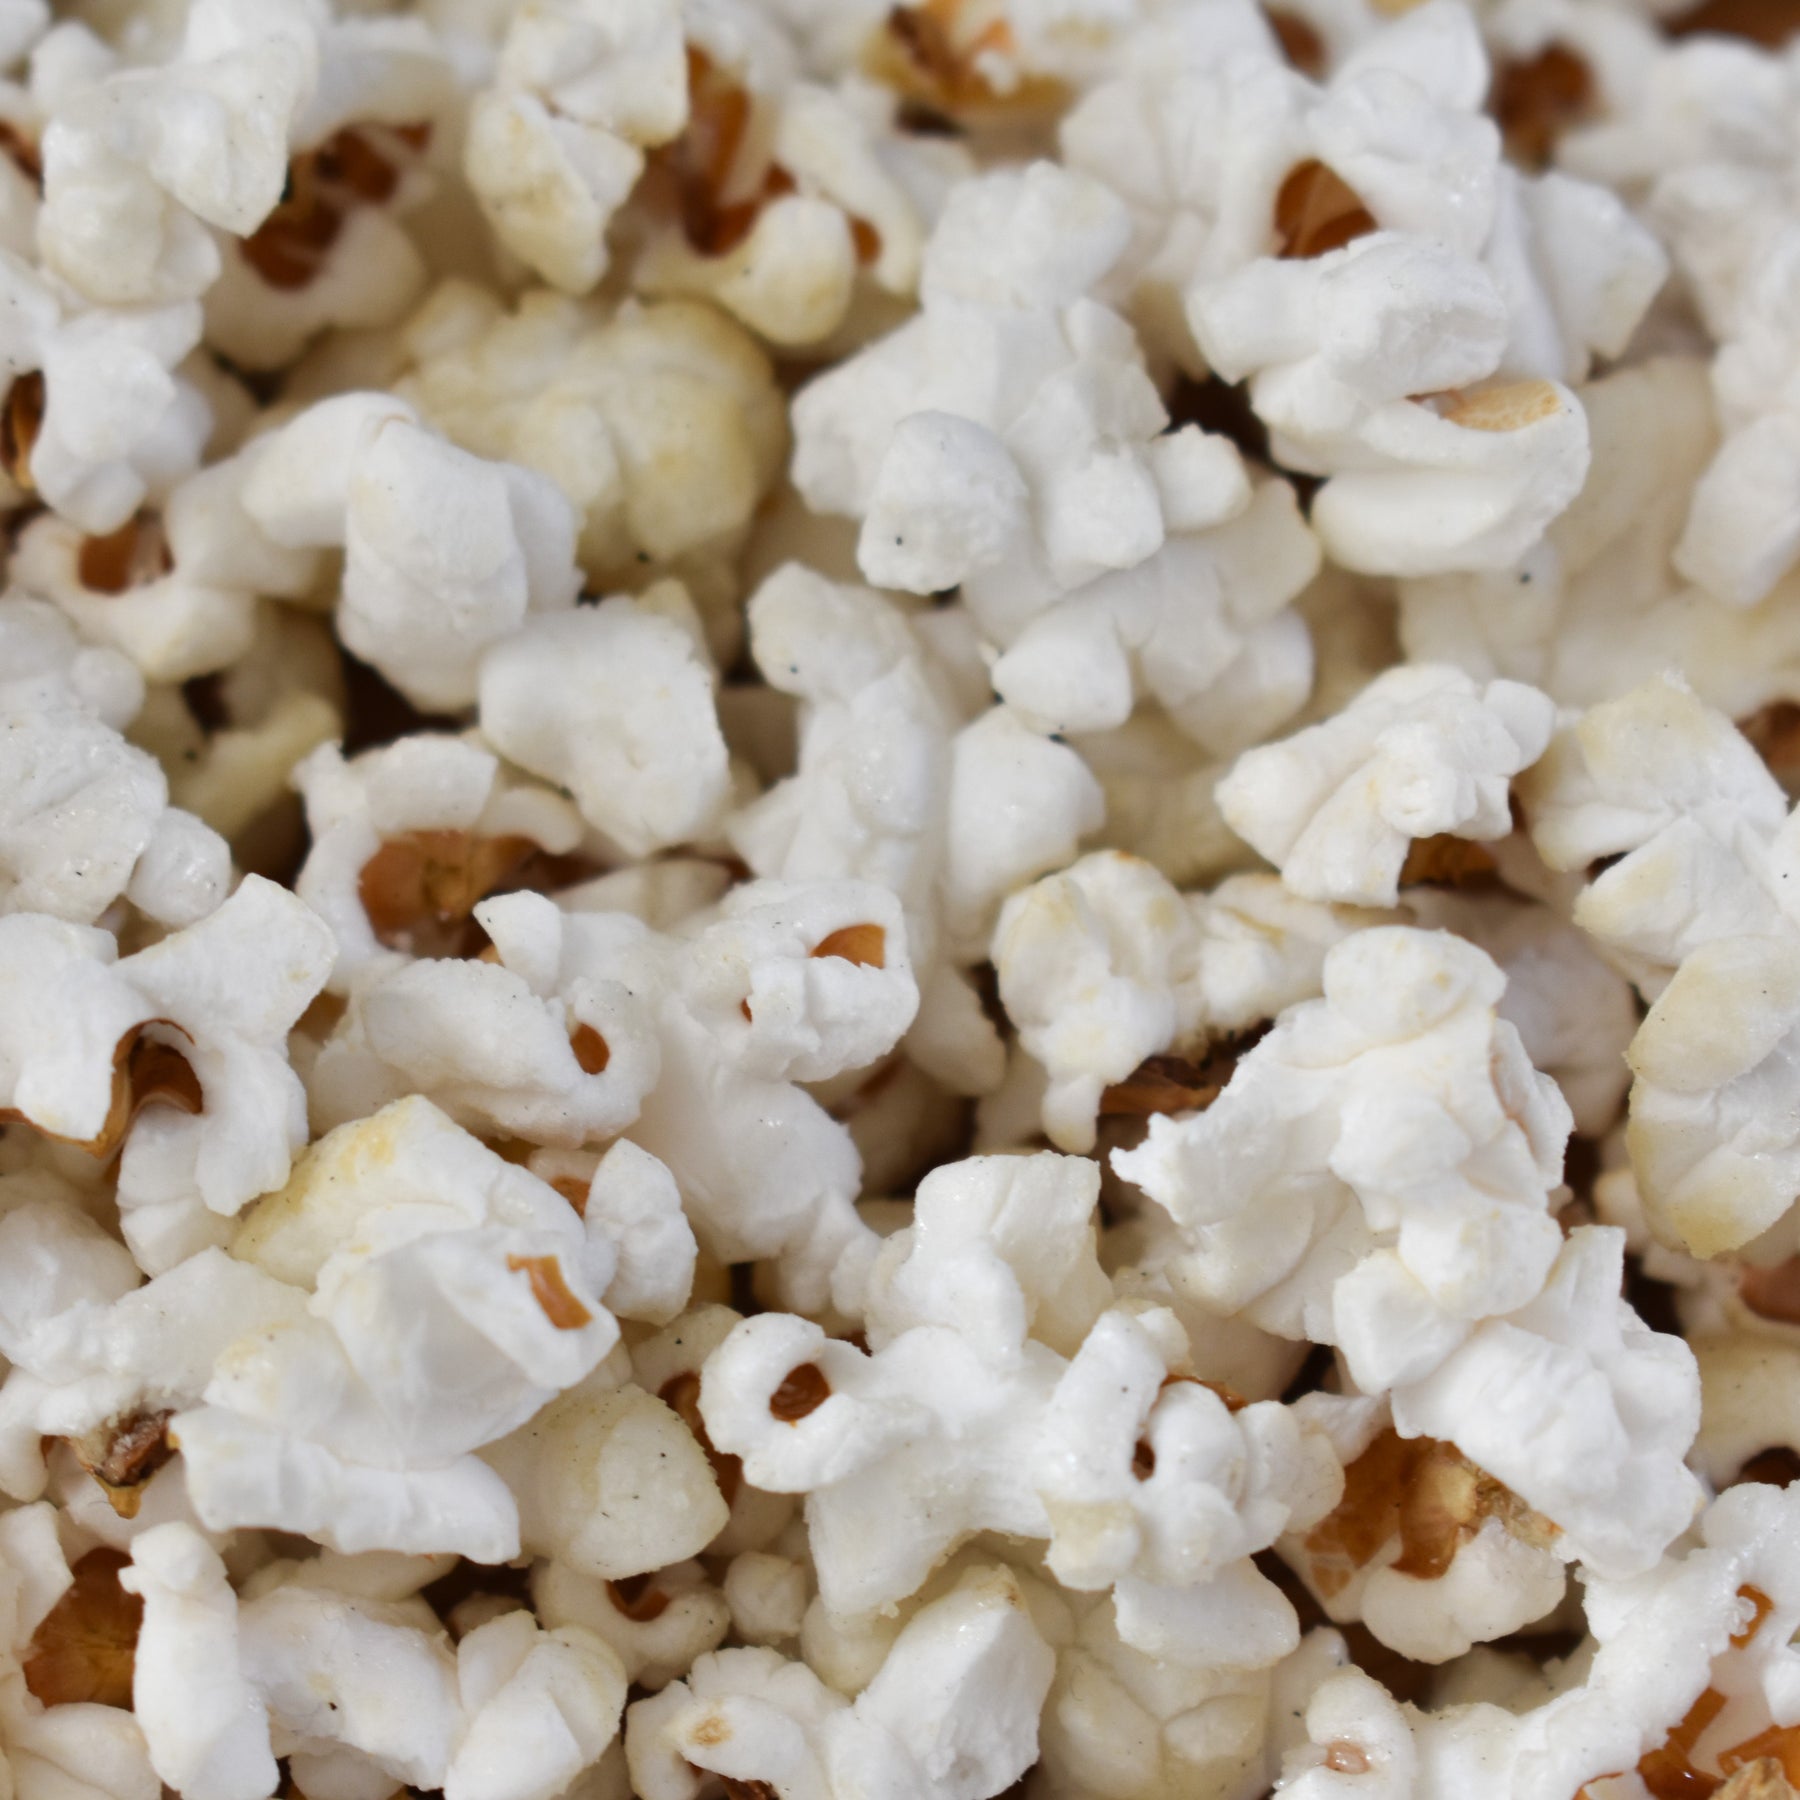 Popcorn Mini Pop! Veganes süßes und salziges Popcorn